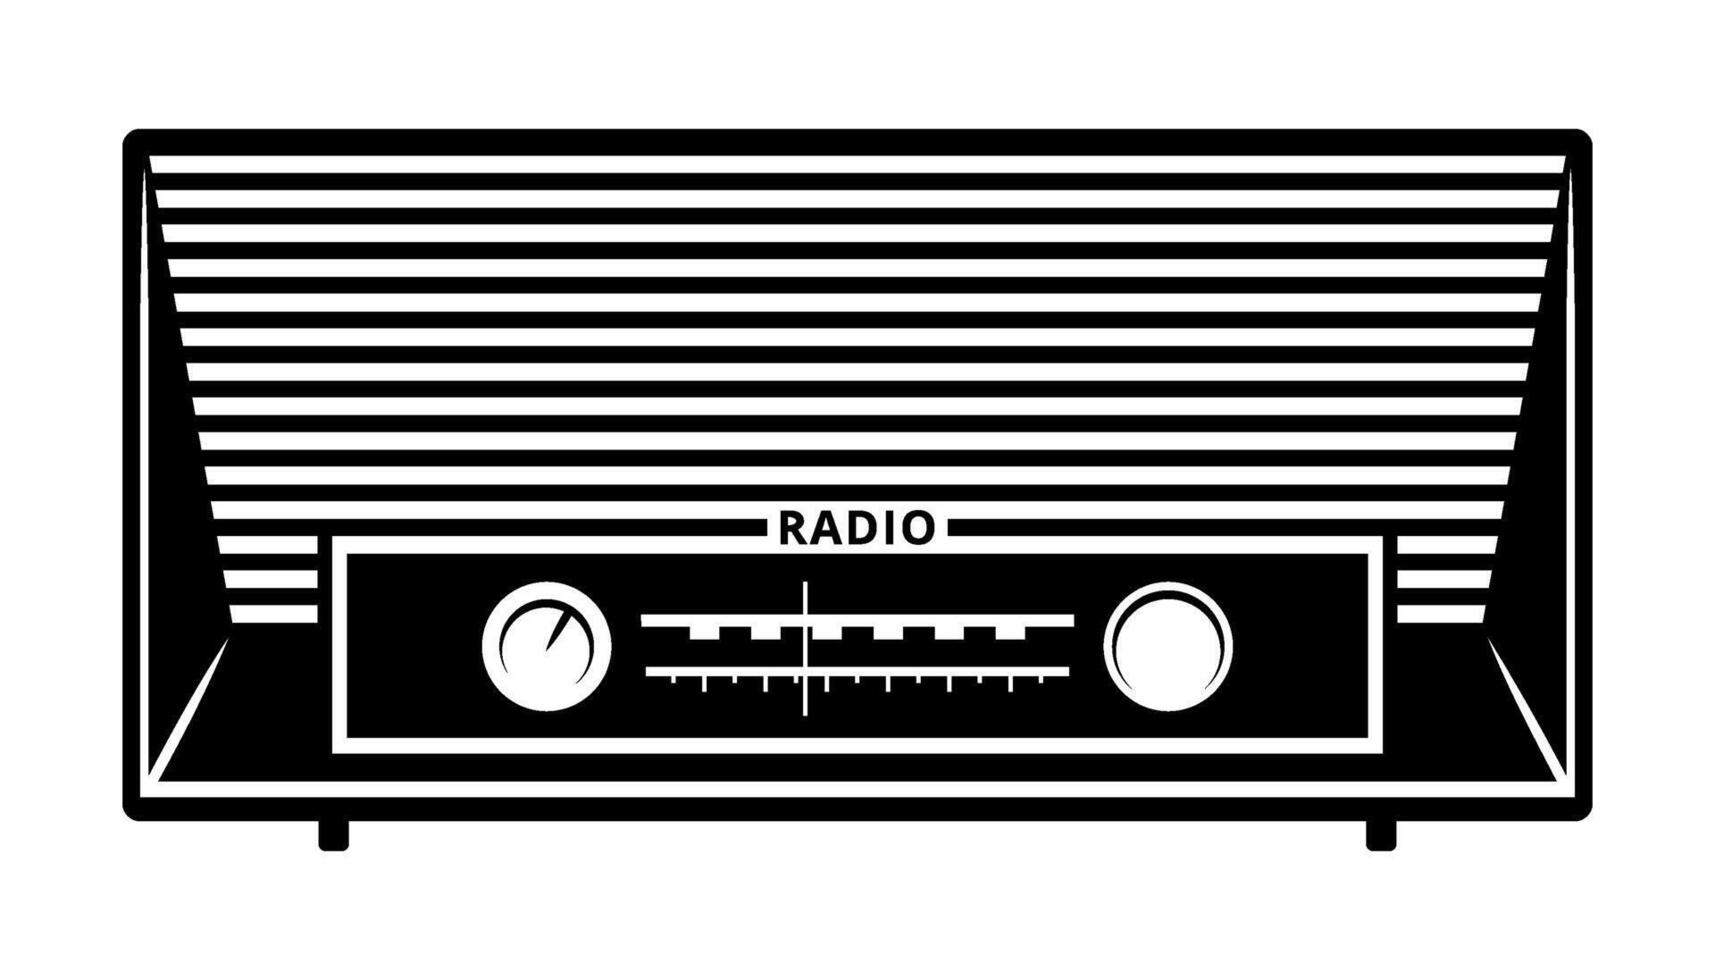 Retro Radio Receiver Silhouette. Vector clipart isolated on white.